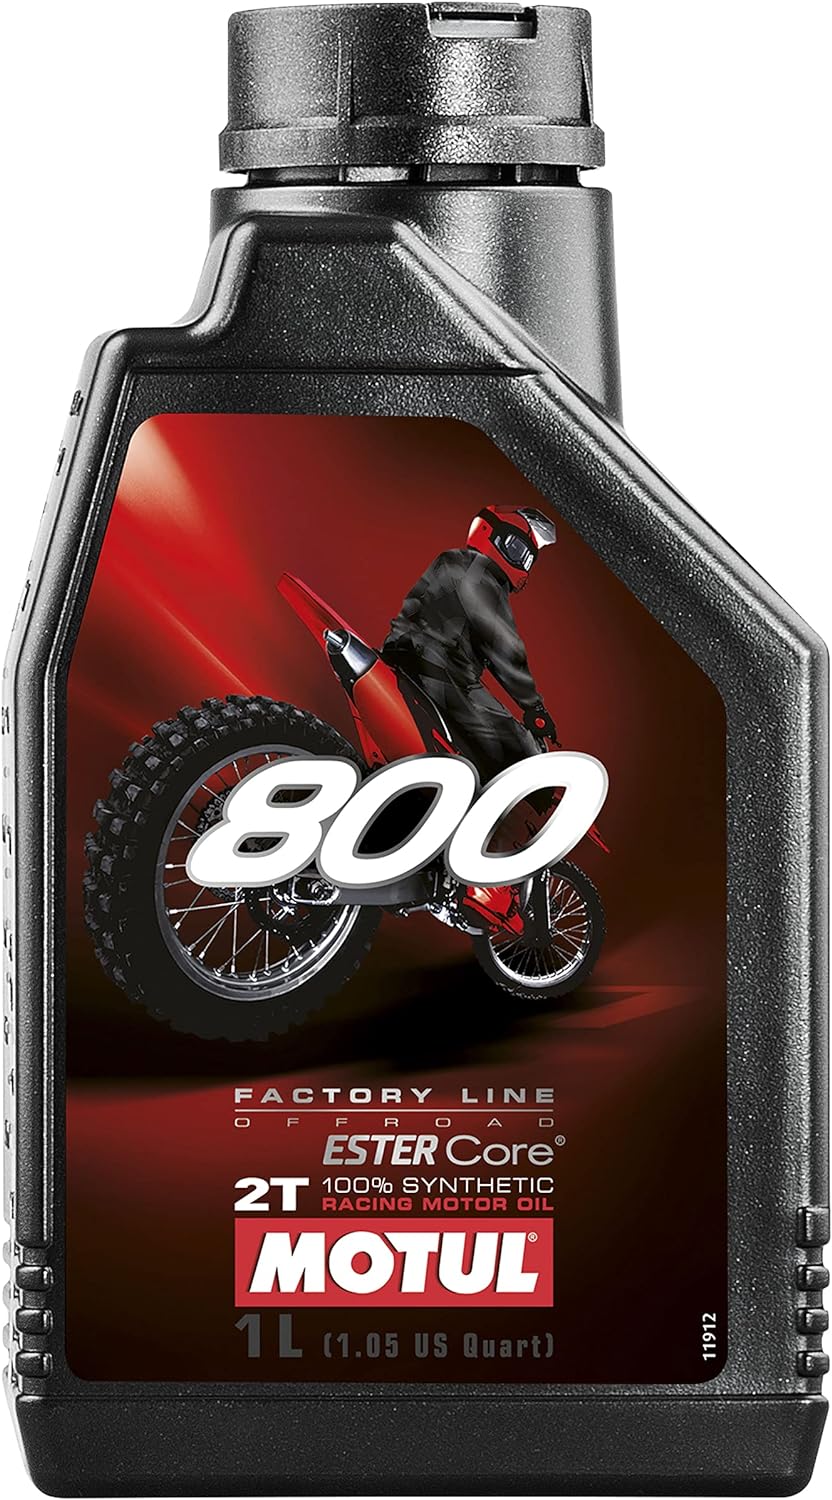 Motul 800-2t Off-Road 100% Synthetic Premix 1 Liter